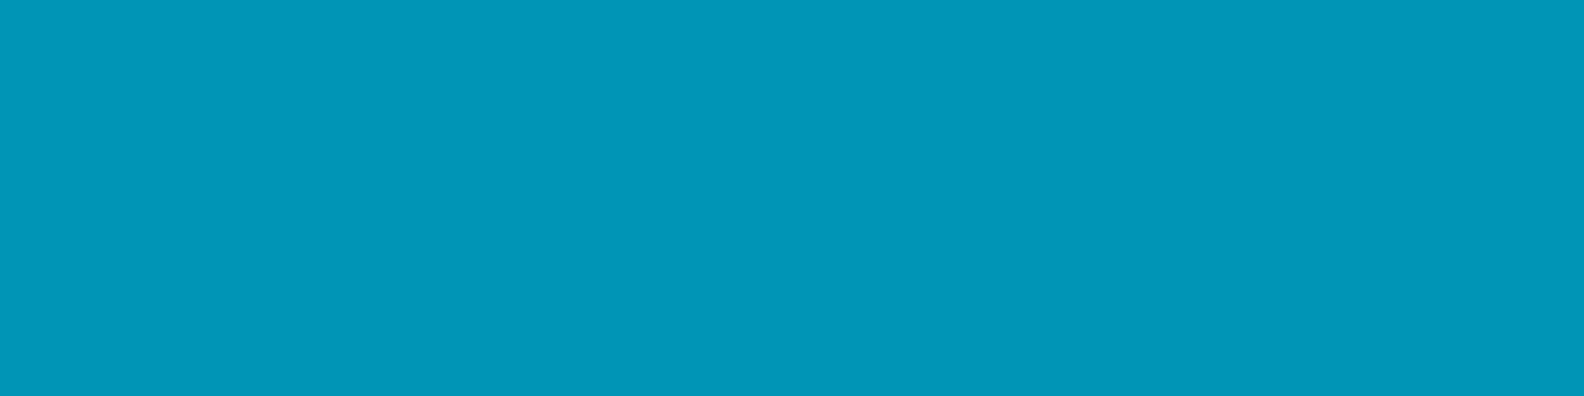 1584x396 Bondi Blue Solid Color Background